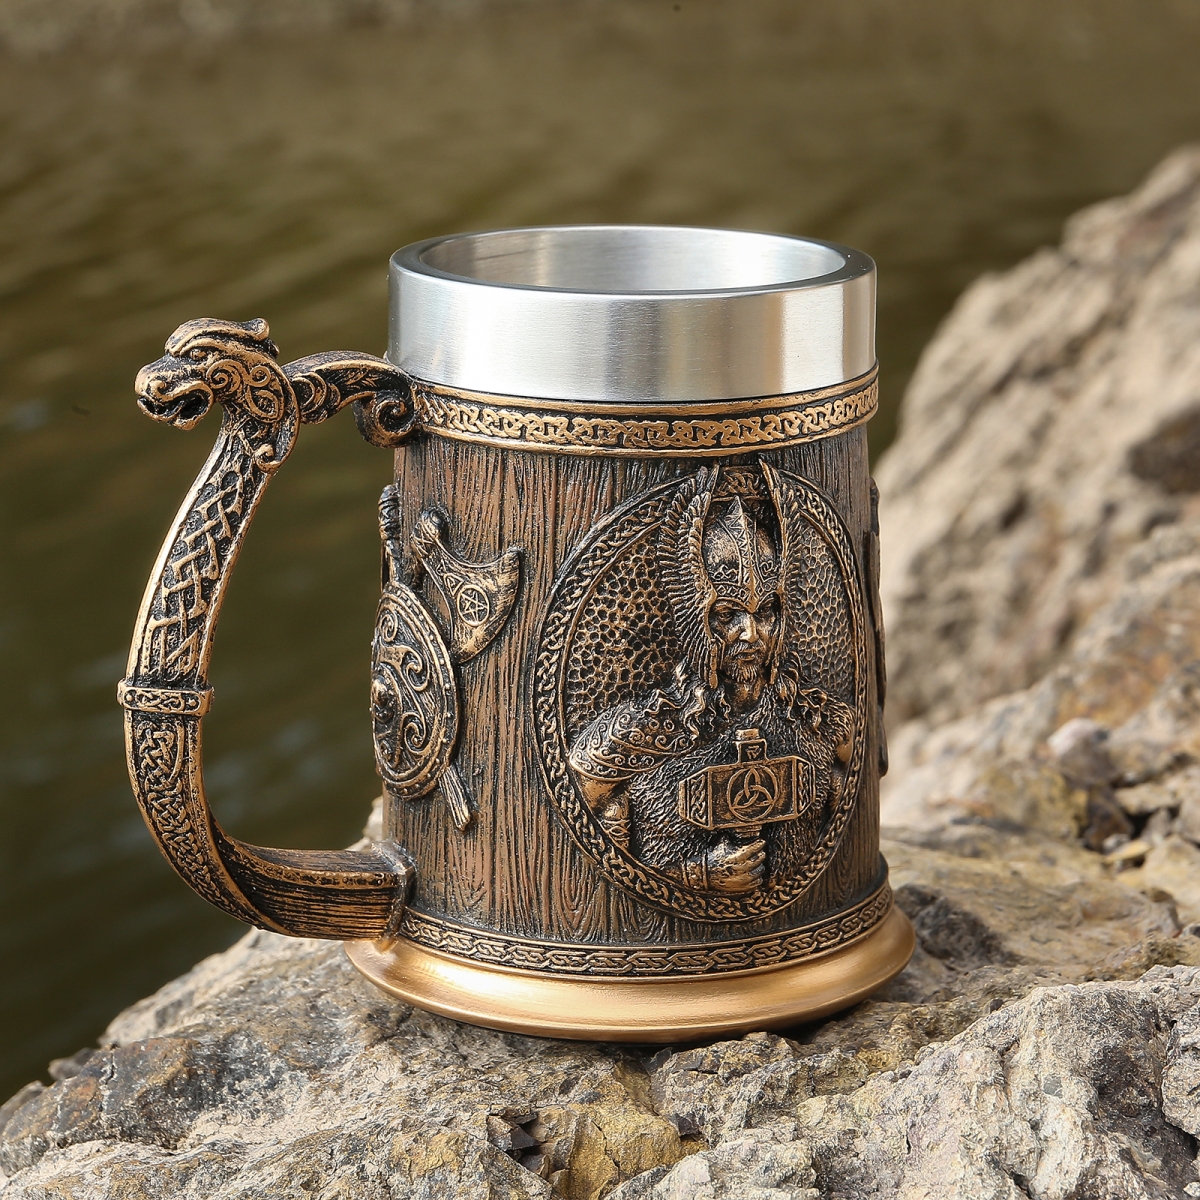 Odin&Thor Tankard US$7.5/PC-NORSECOLLECTION- Viking Jewelry,Viking Necklace,Viking Bracelet,Viking Rings,Viking Mugs,Viking Accessories,Viking Crafts